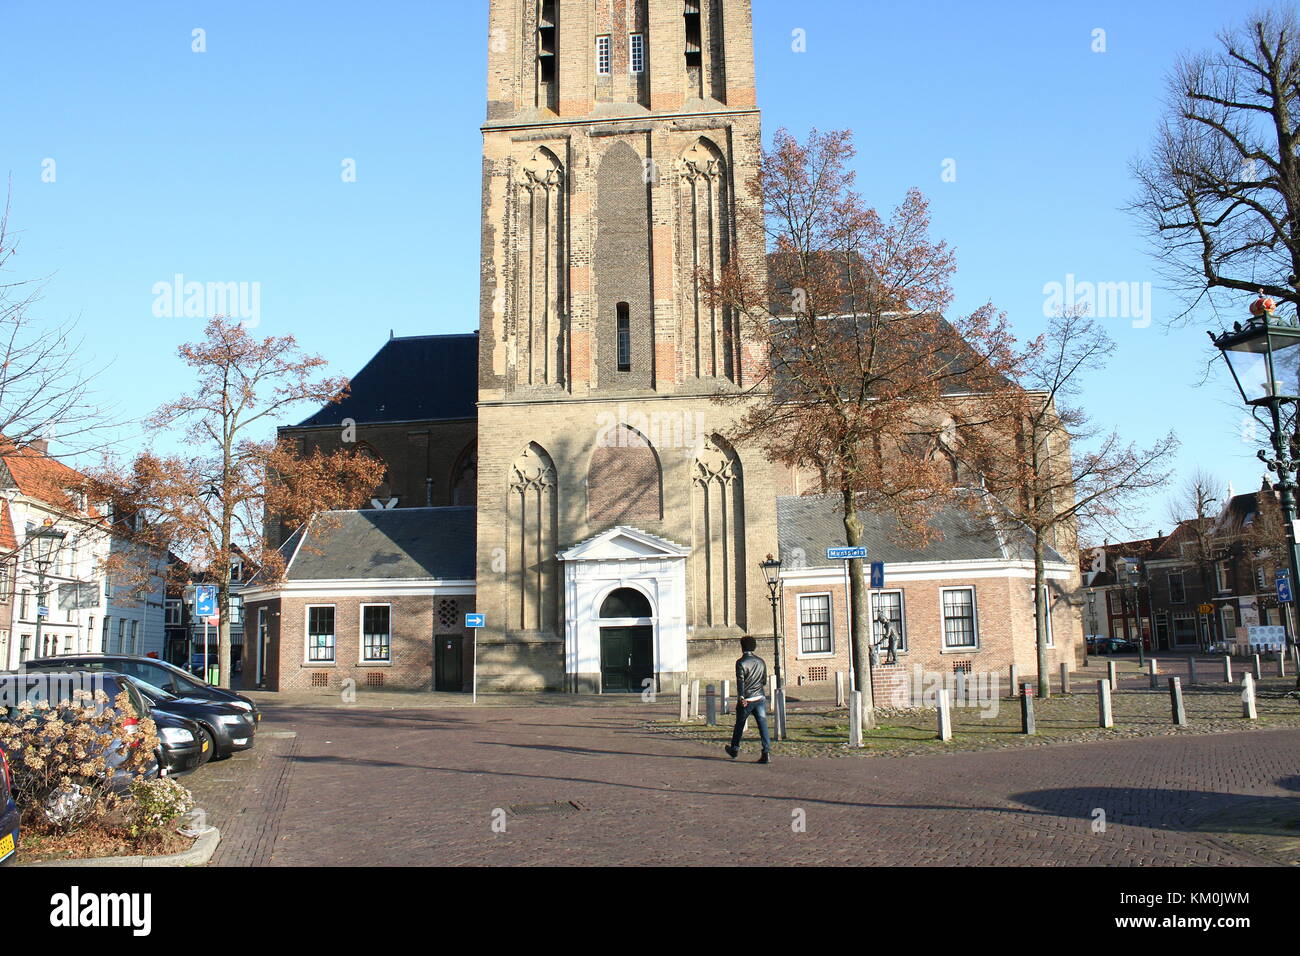 Grande San medievale Nicolaaskerk (Bovenkerk - Saint Nicolas Church), interna della città di Kampen, Paesi Bassi Foto Stock